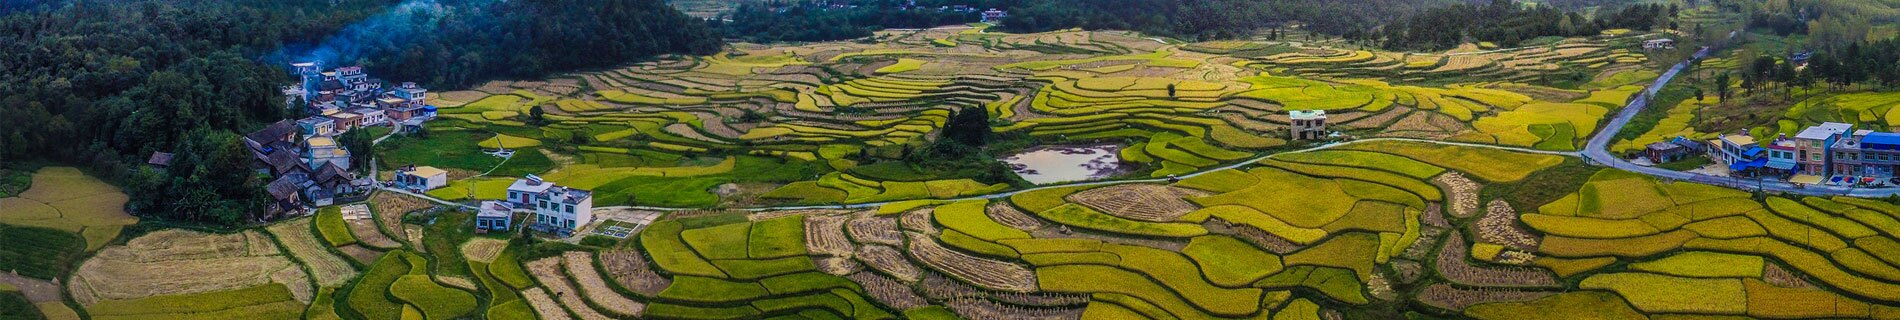 Yunnan Luoping Rice Terraced Fields